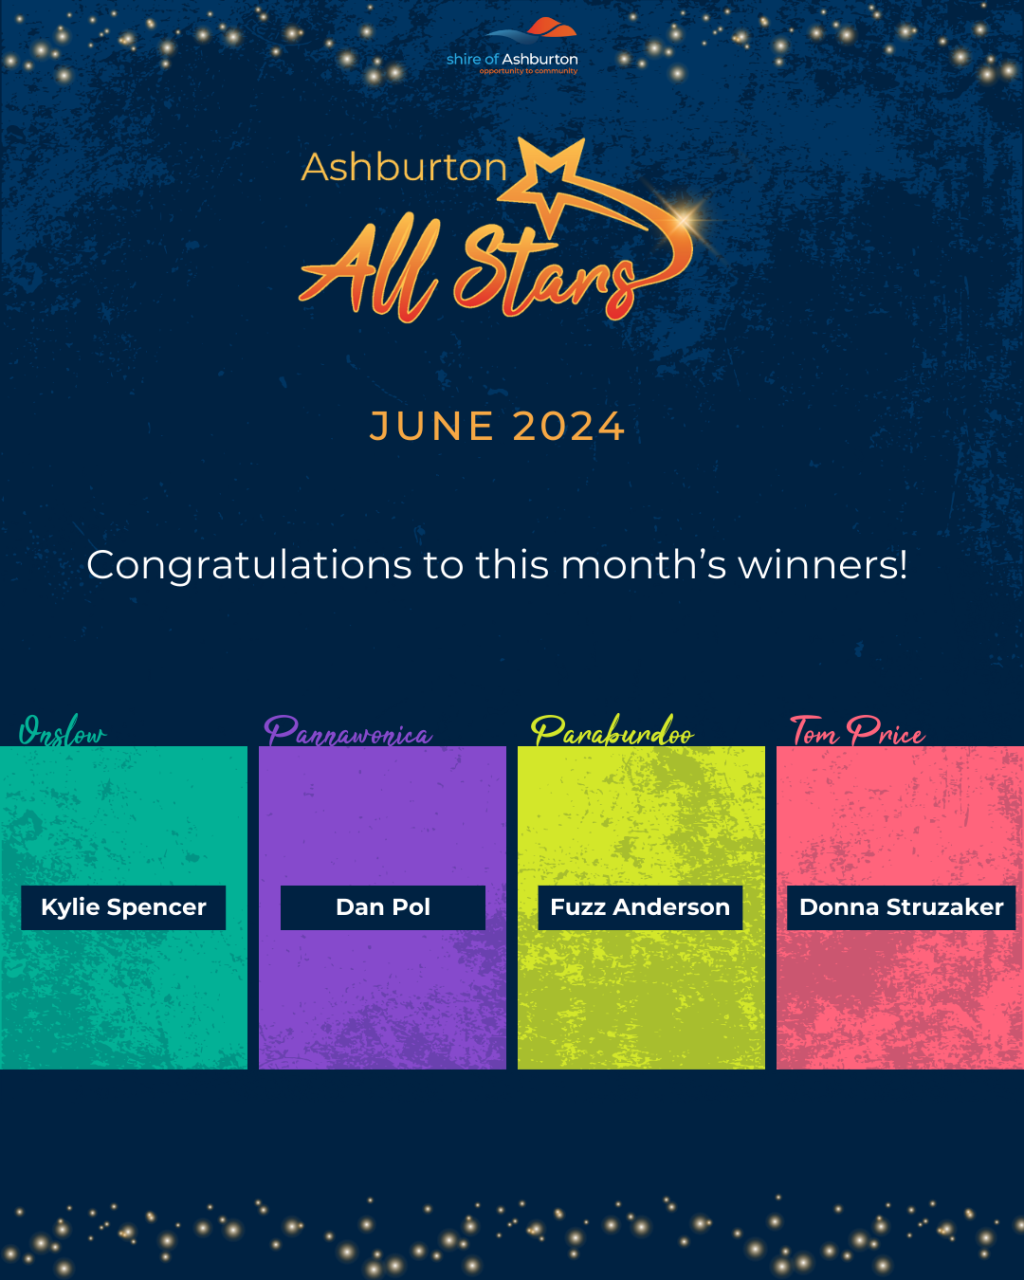 Announcing June's Ashburton All Stars!